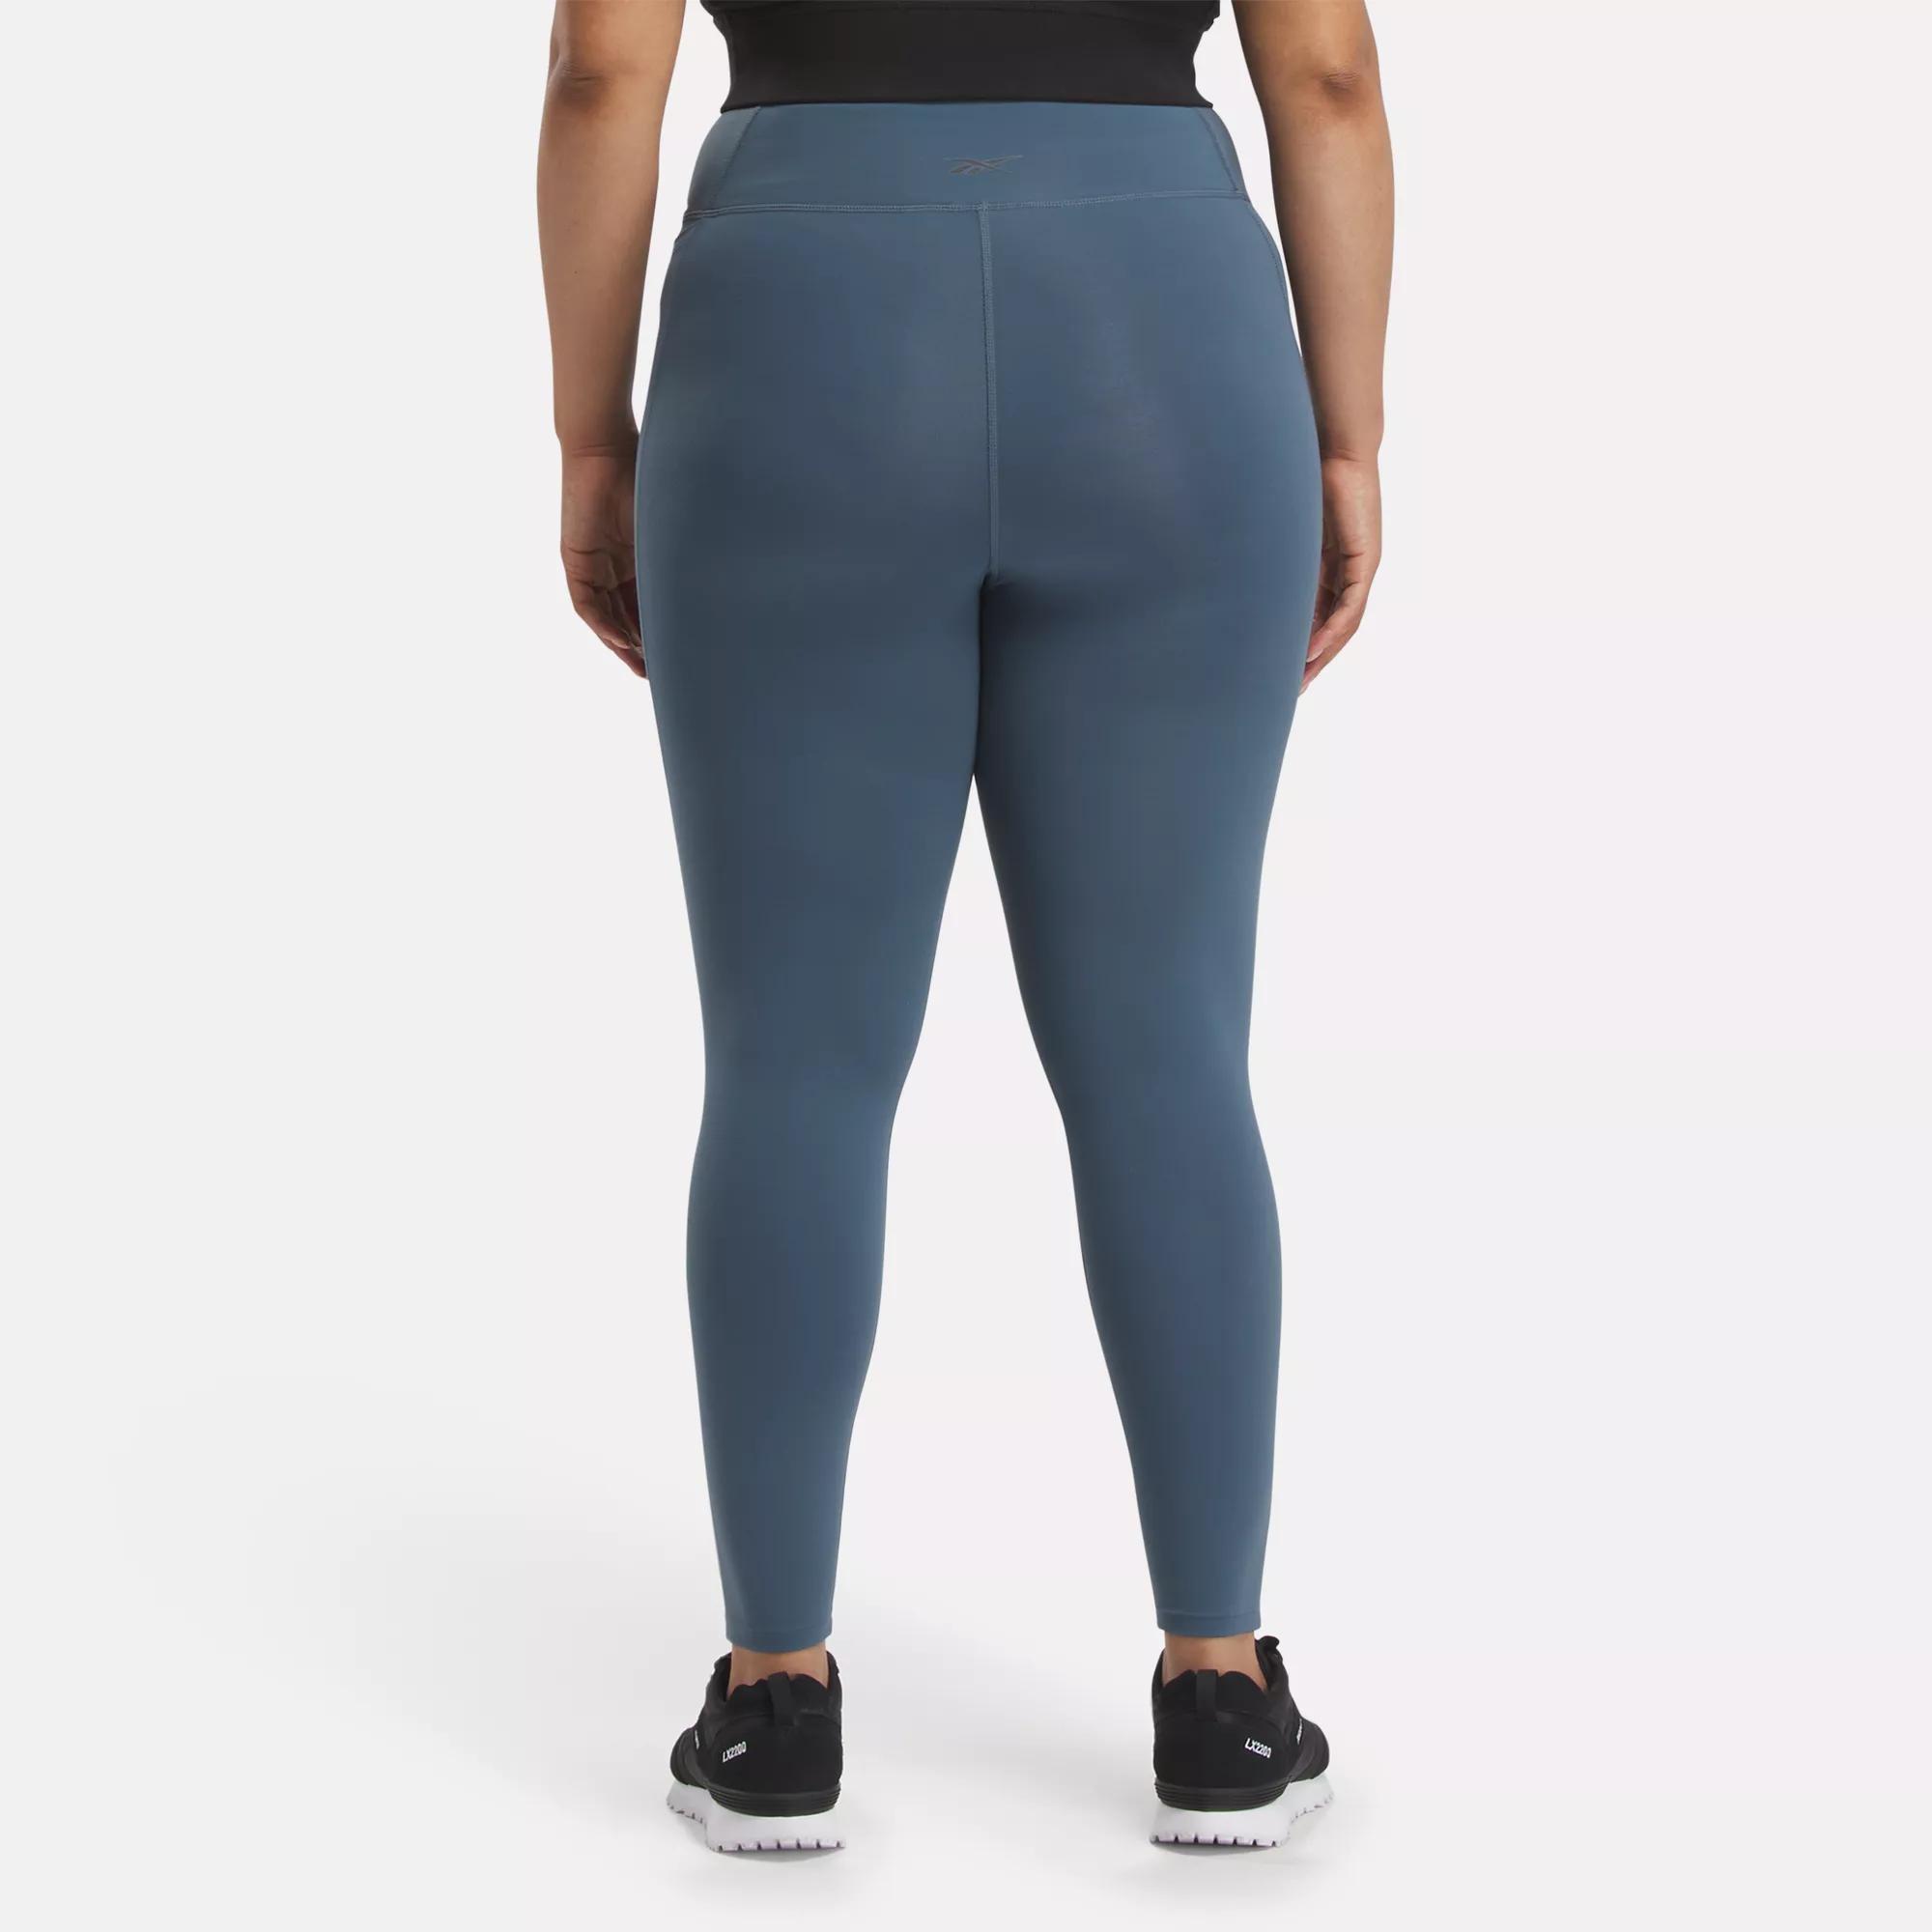 Women's figure-hugging running leggings (XS to 5XL - Large size) - blue/grey